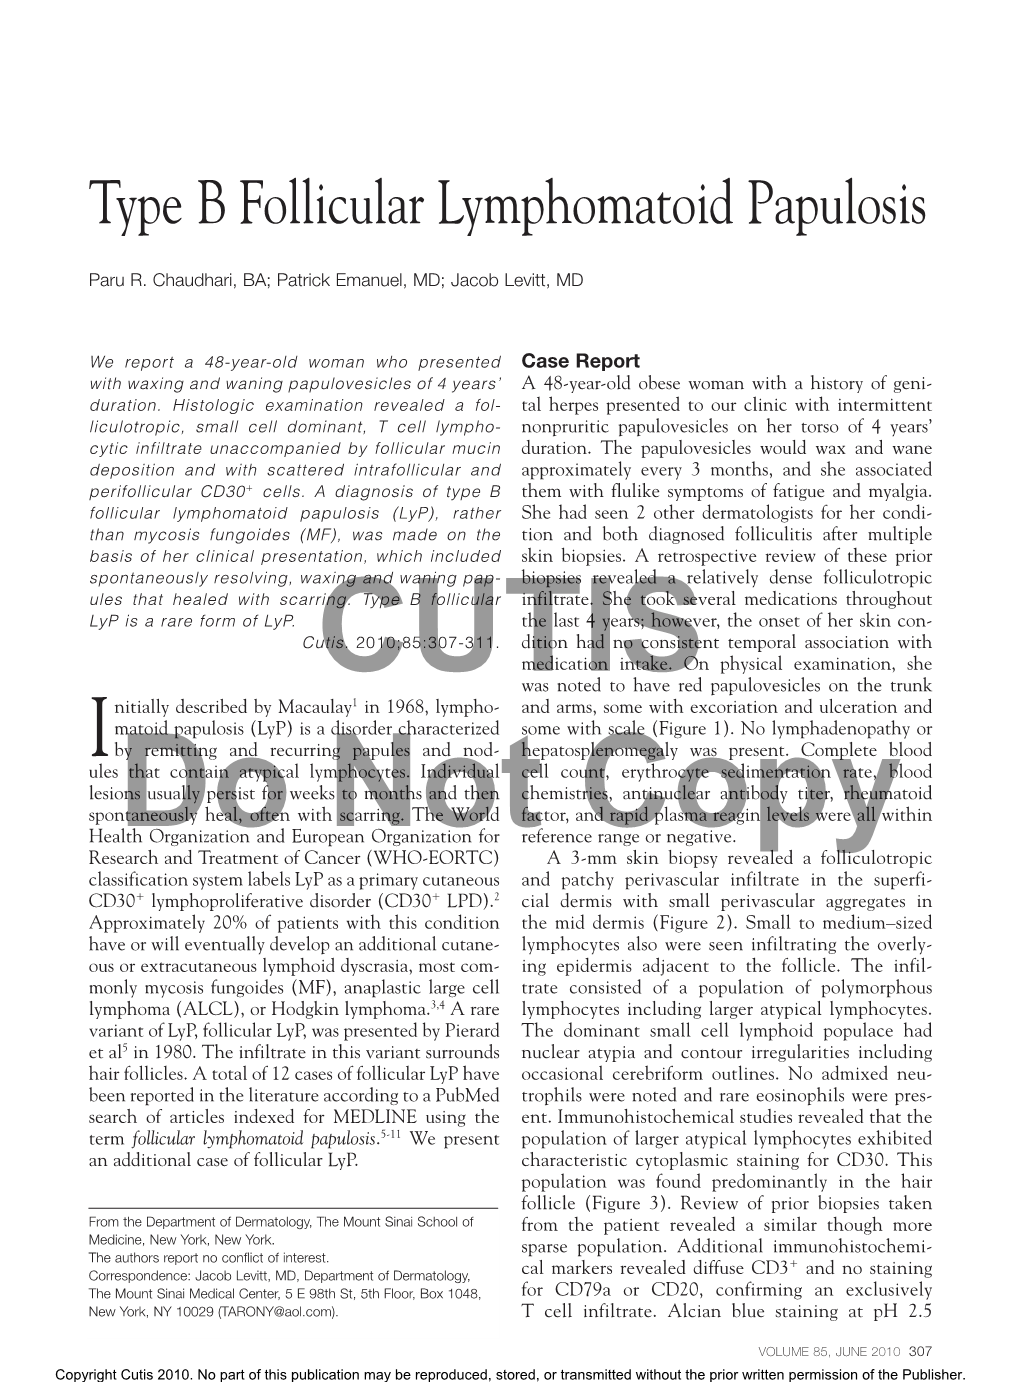 Type B Follicular Lymphomatoid Papulosis